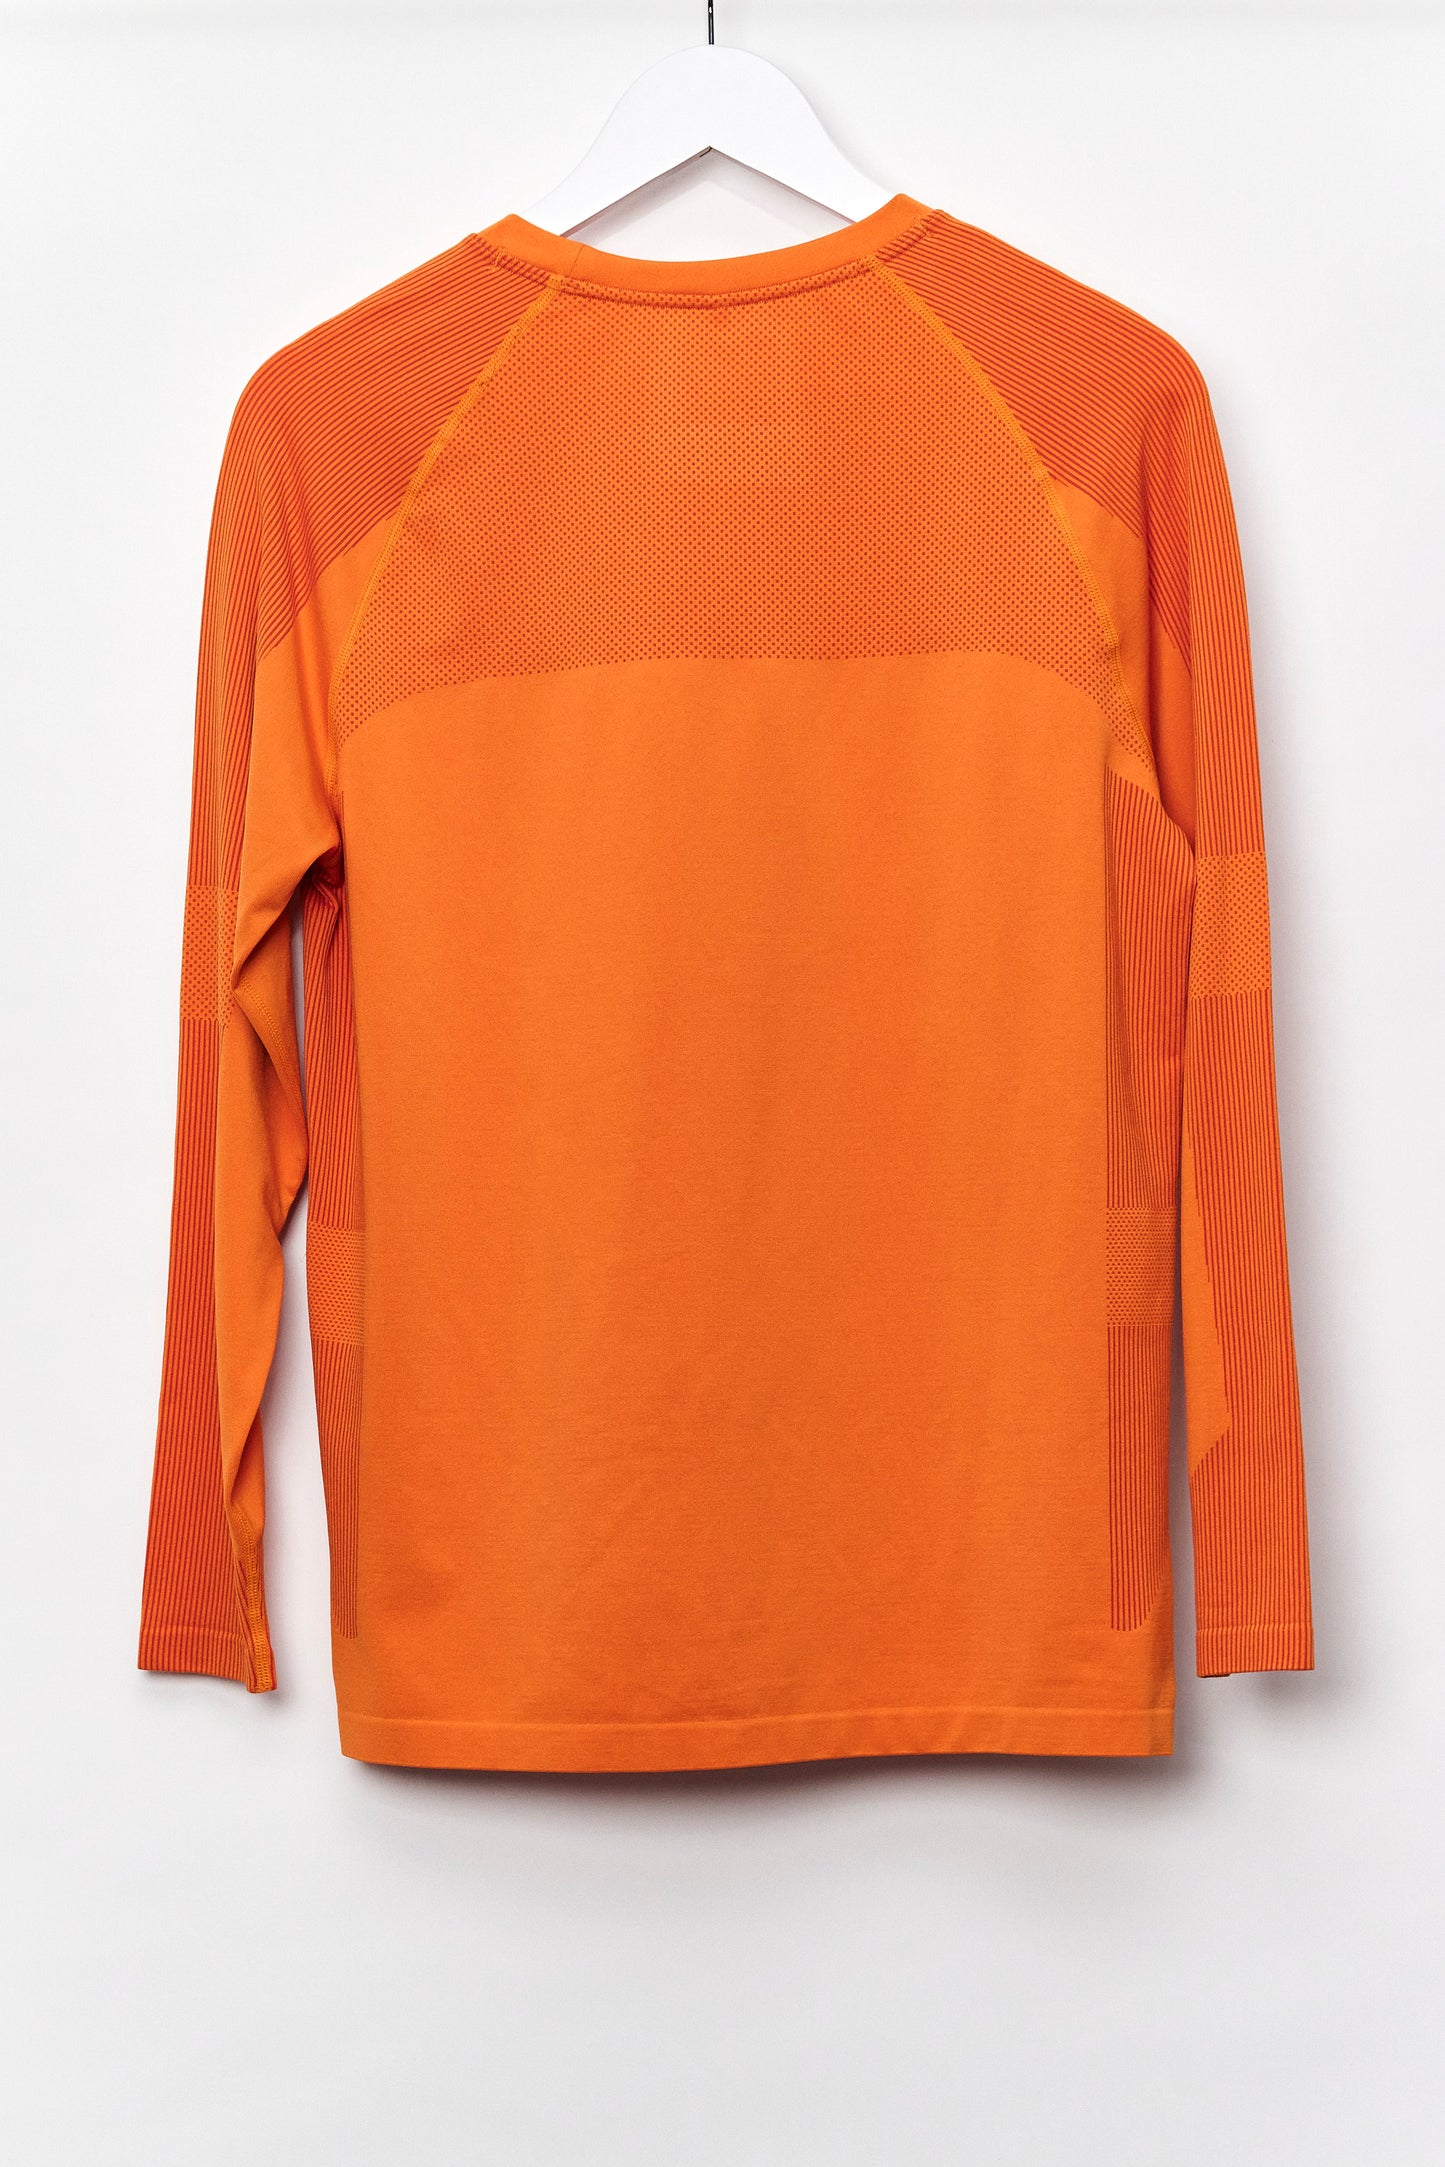 Mens H&M Orange Long Sleeve Sport Top Size Large